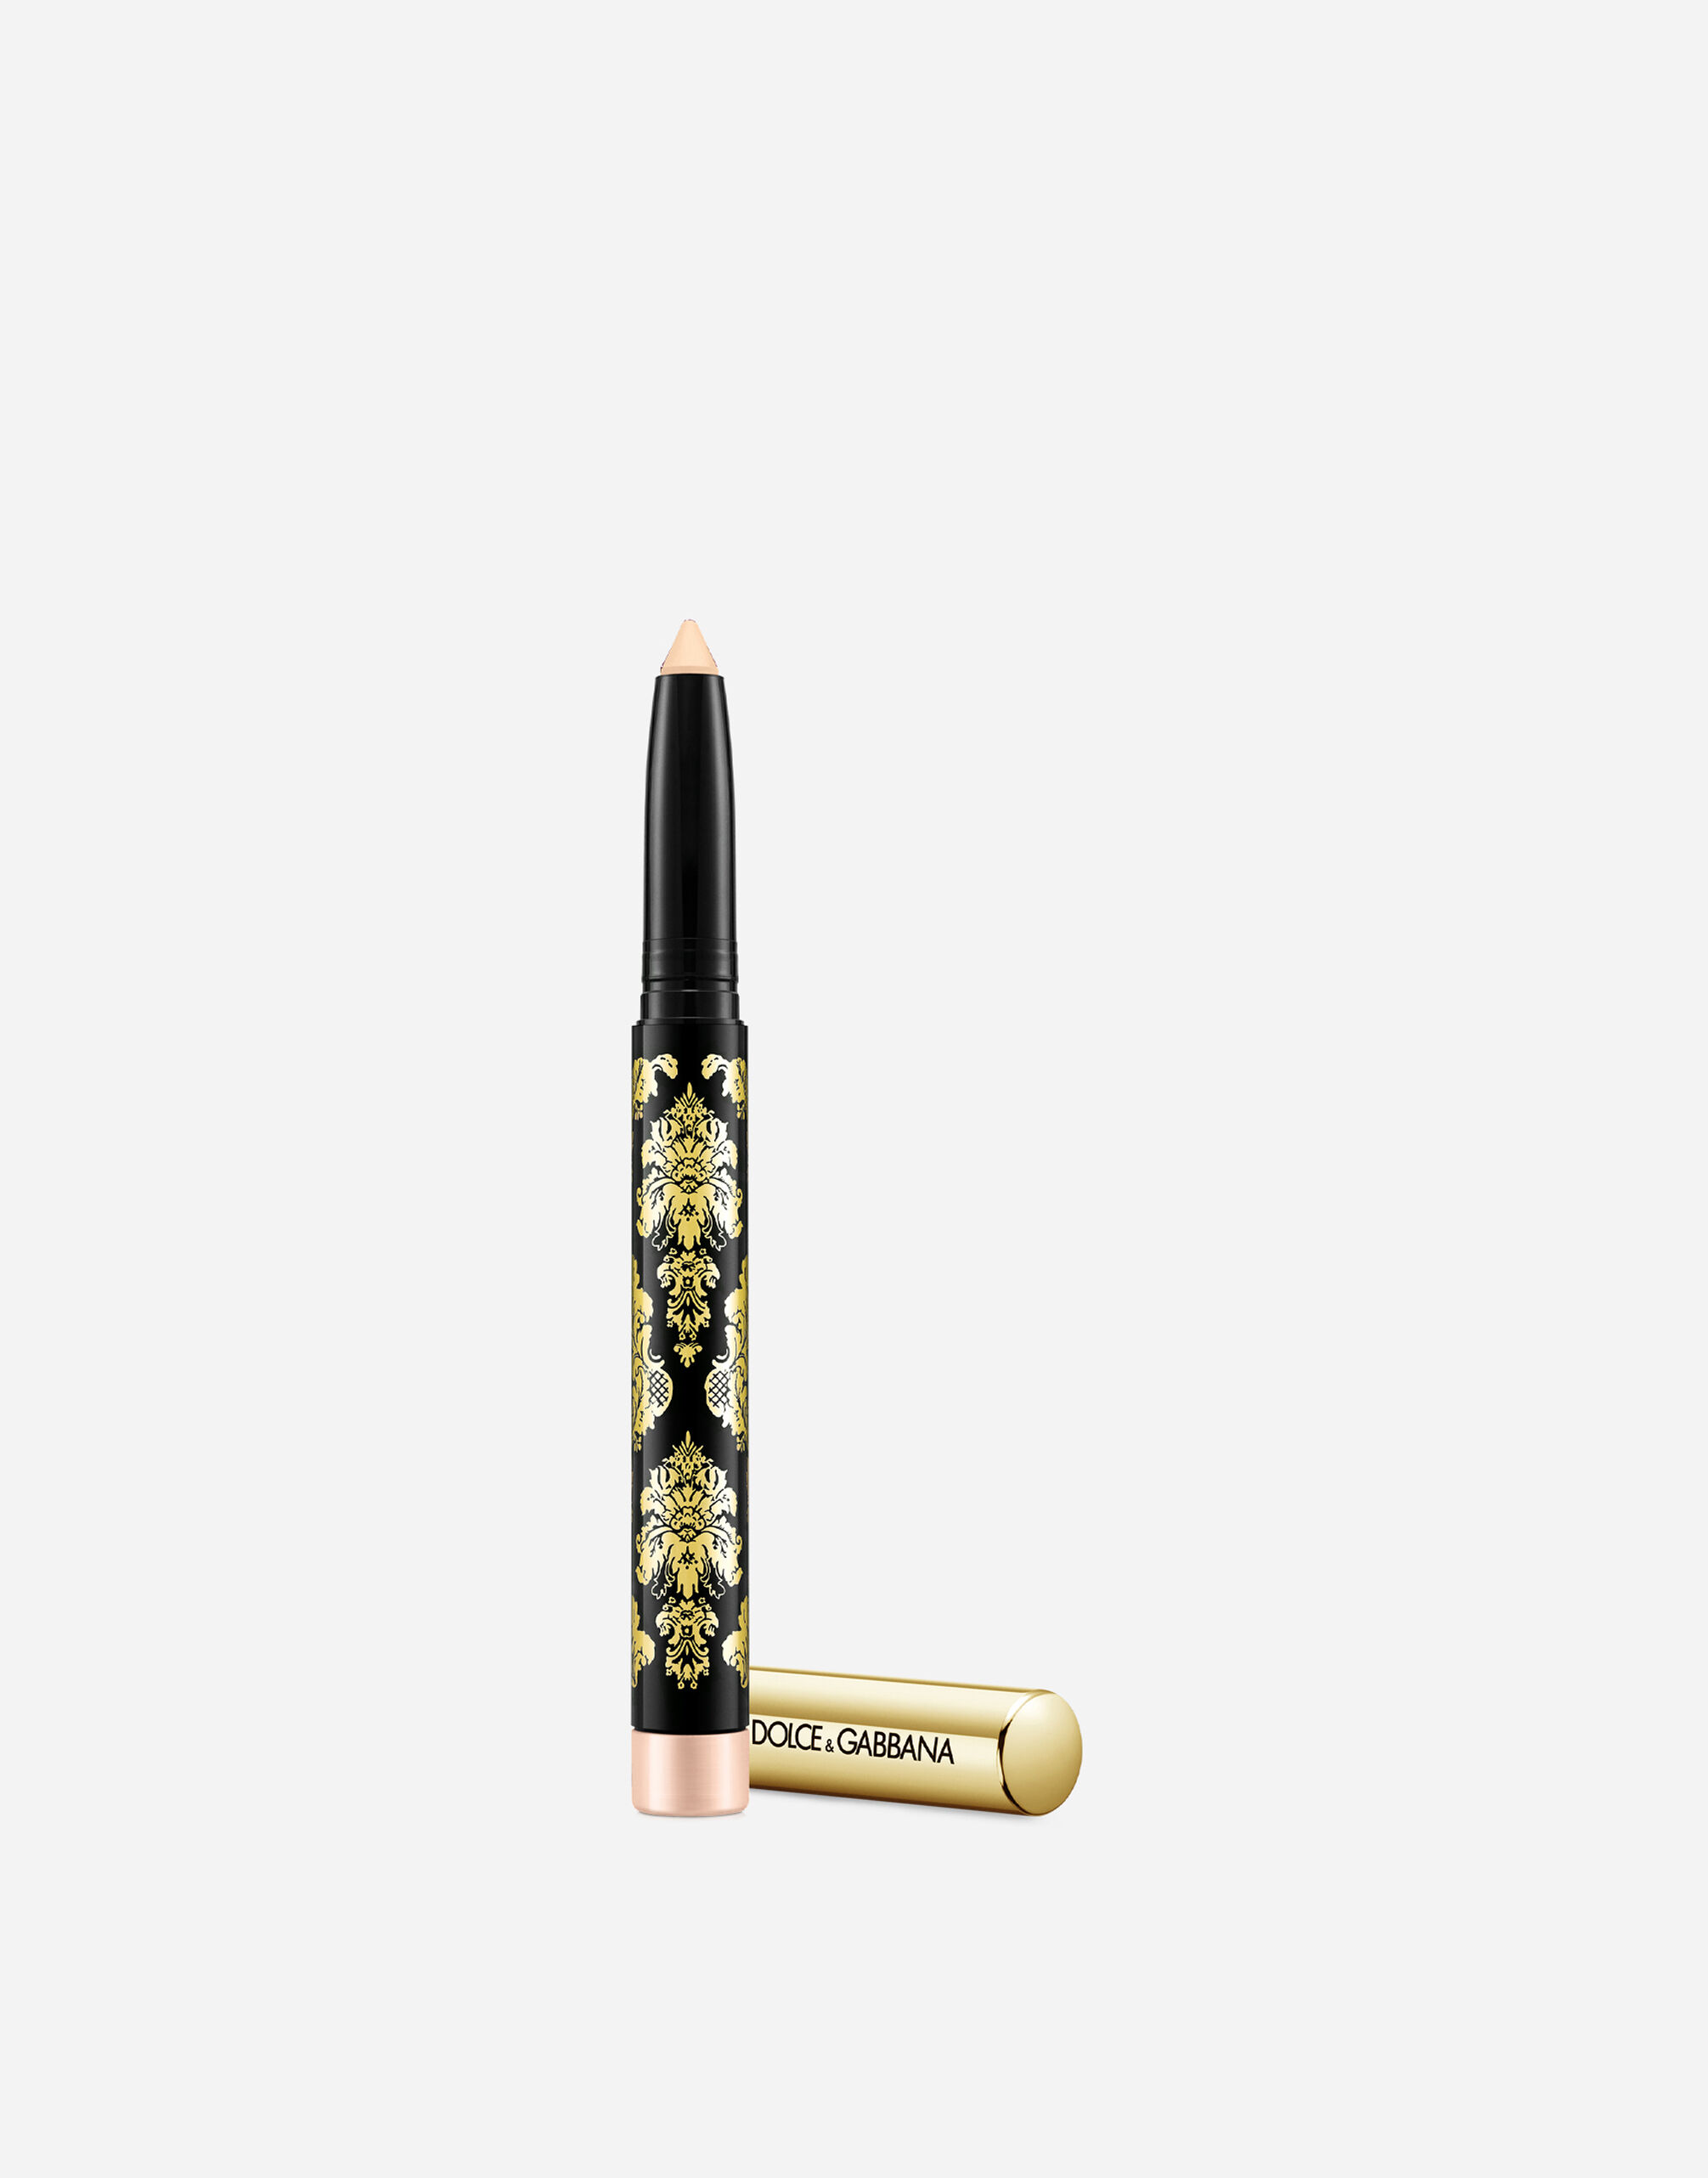 Тени-карандаш для глаз Dolce & Gabbana Intenseyes кремовые, №2 Nude, 1,4 г пудра для лица sexy nude powder 7г light